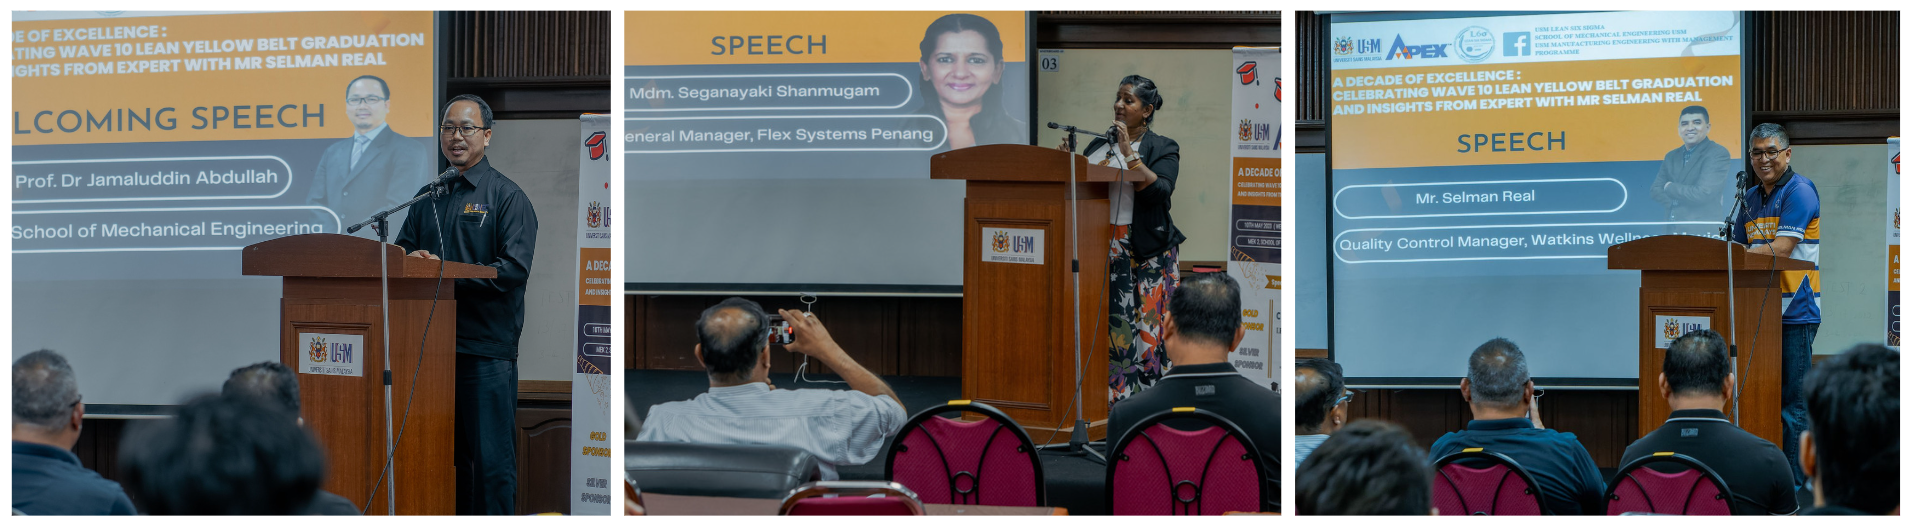 Photo 1 Speeches by AP Dr Jamaluddin Abdullah Madam Seganayaki Shanmugam and Mr Selman Real